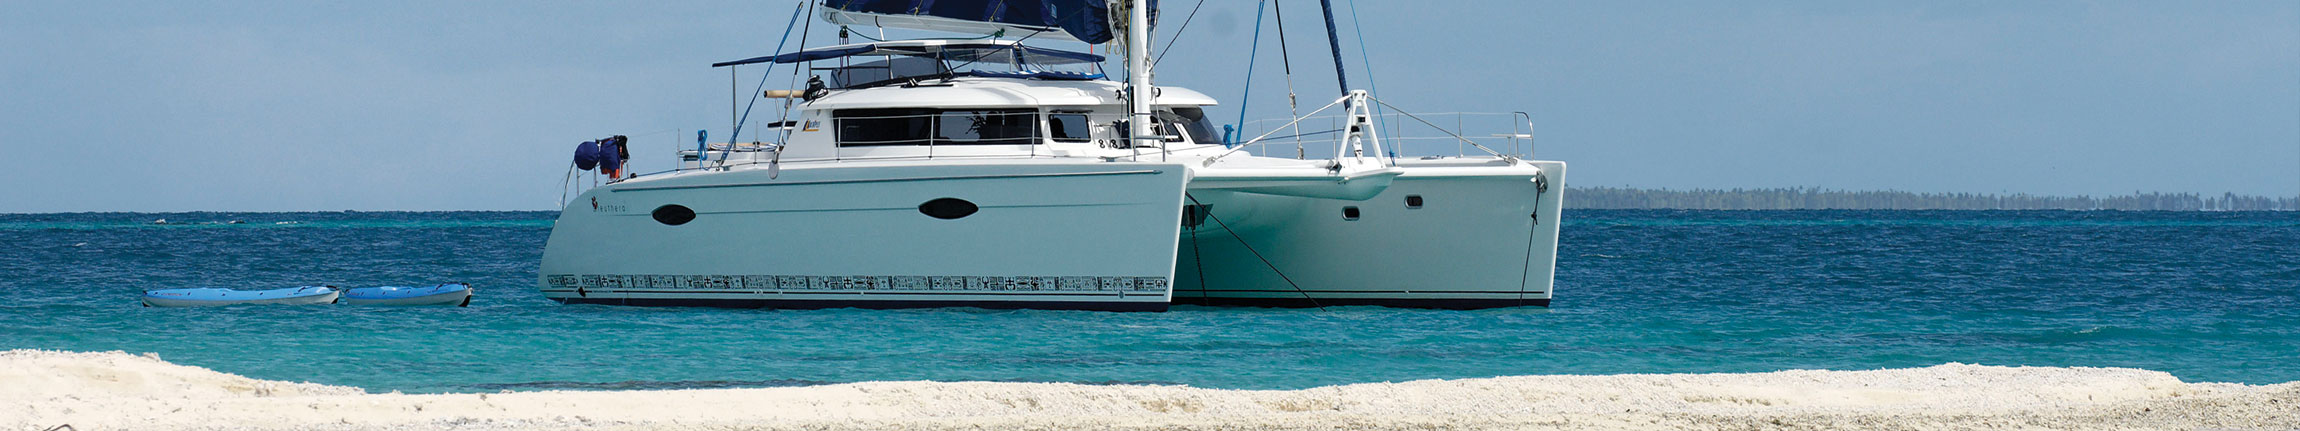 dream yacht charter tahiti reviews